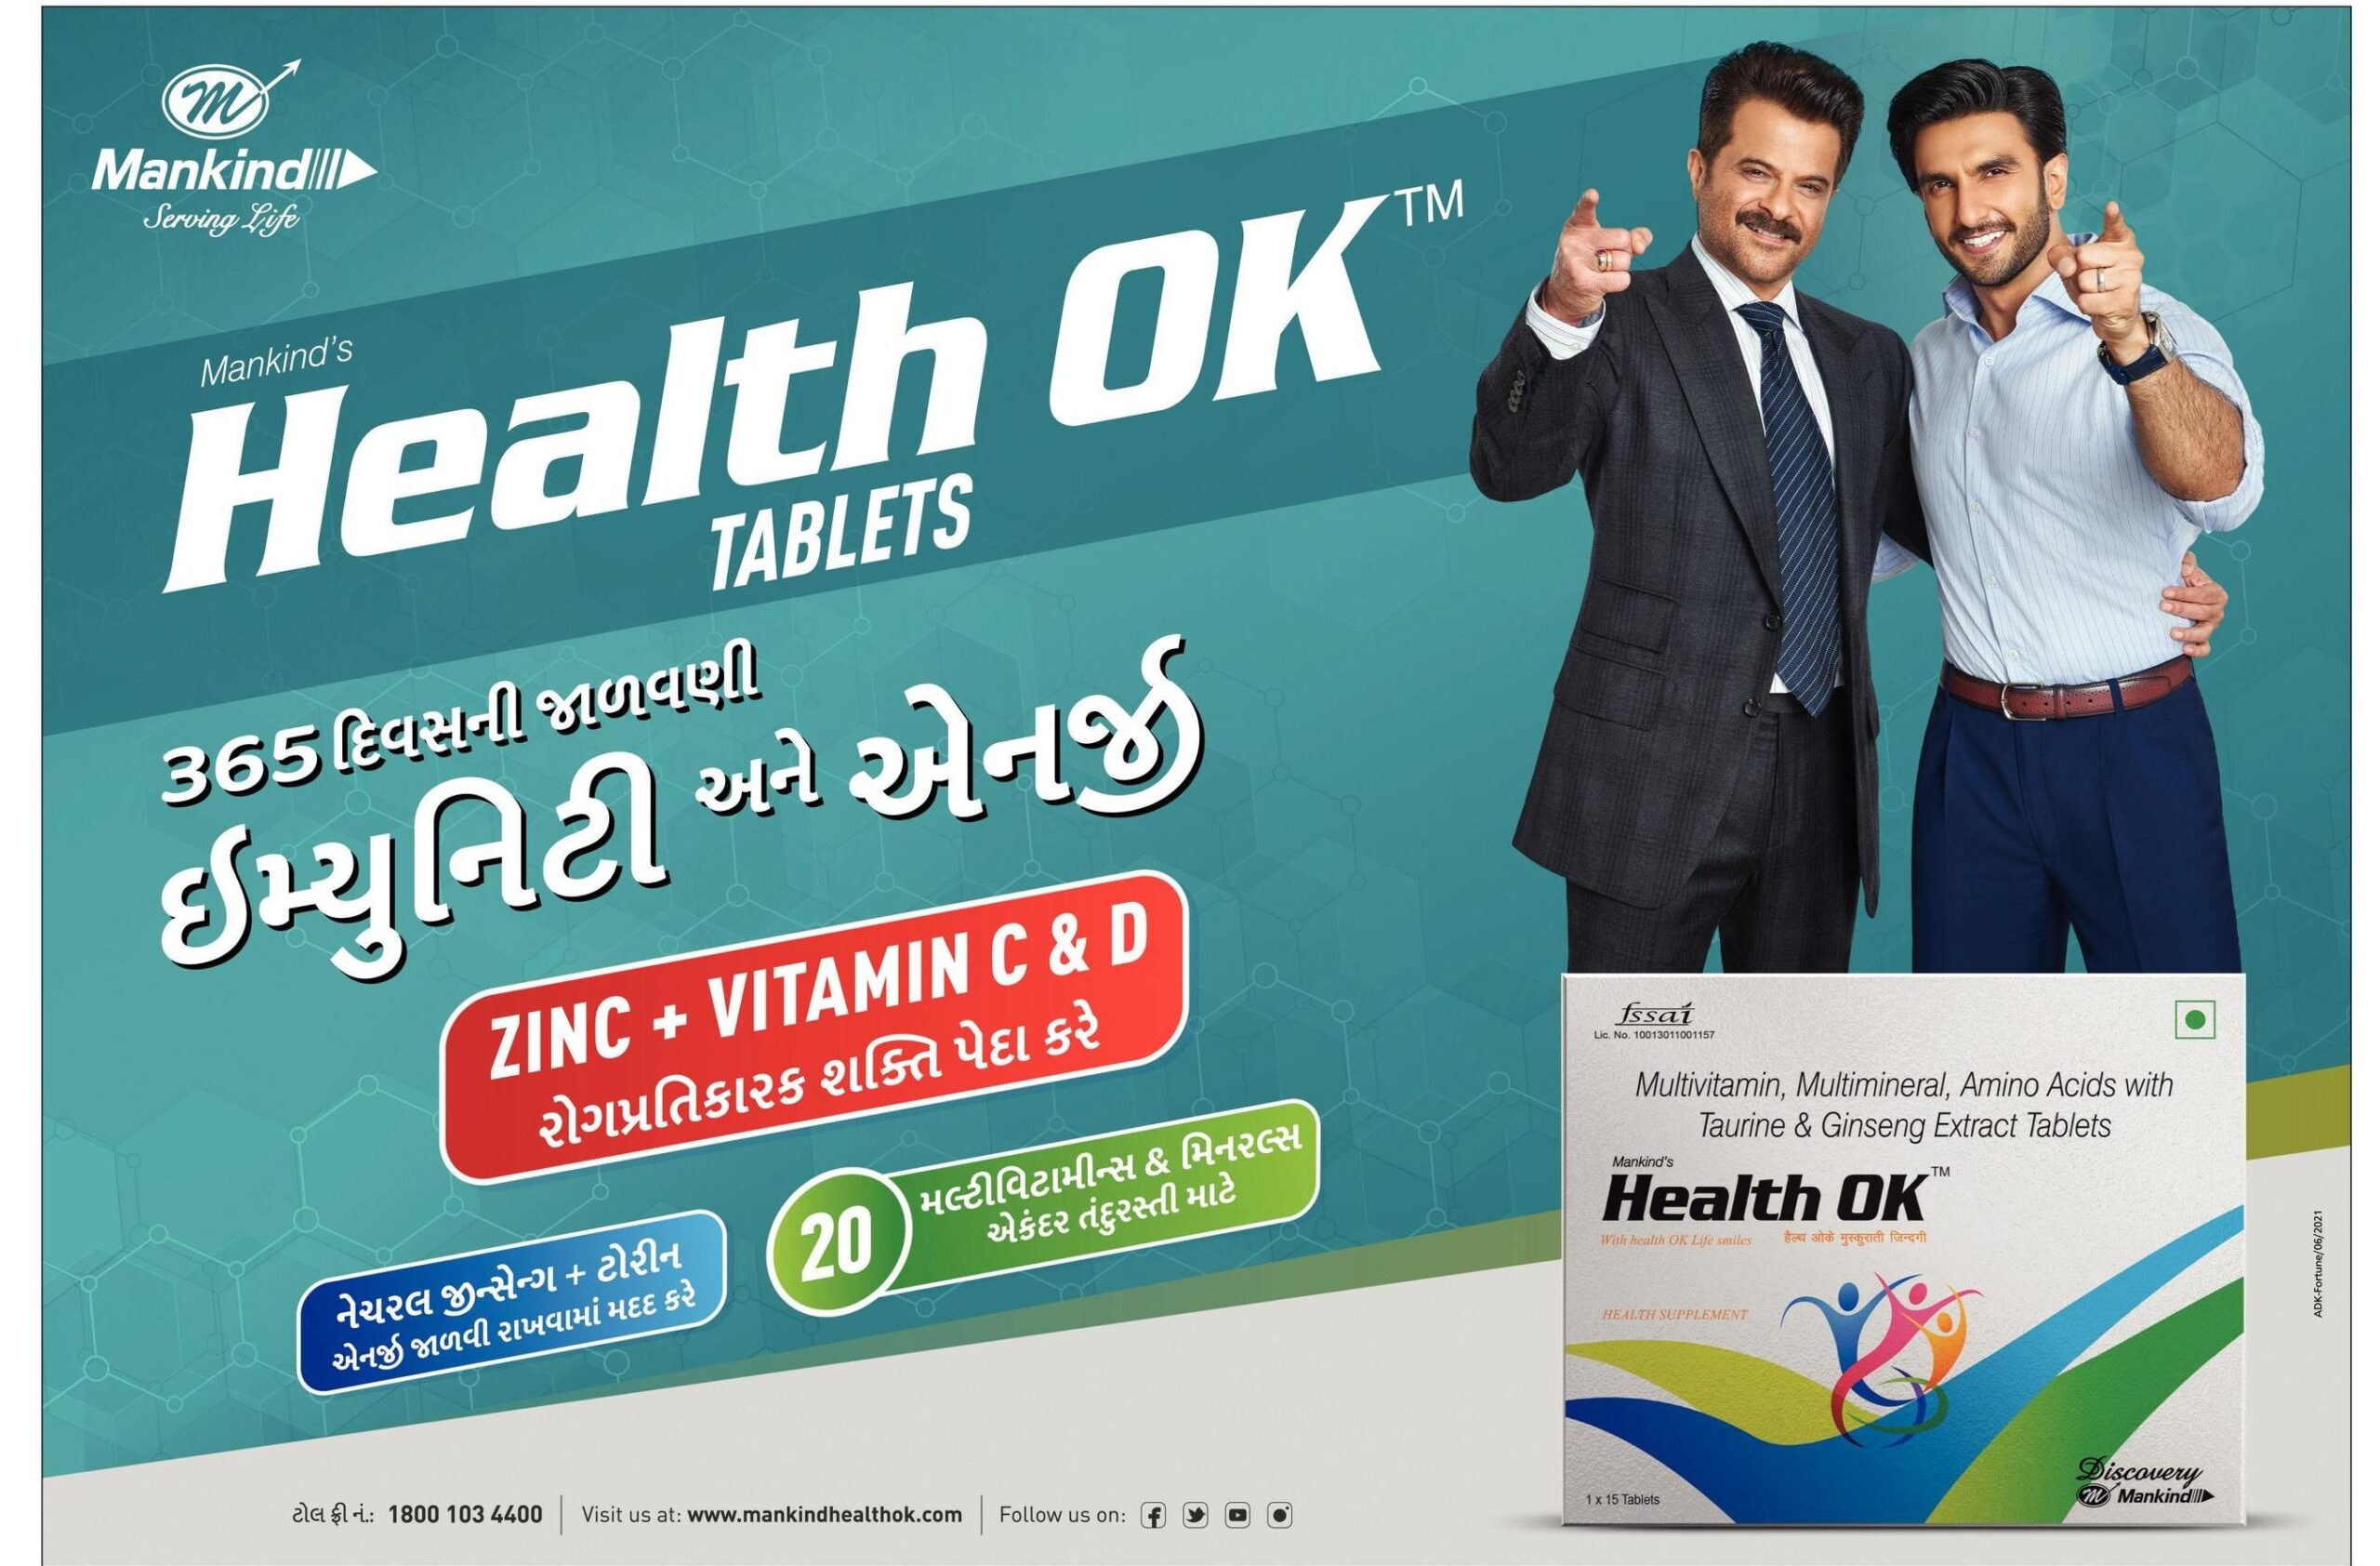 mankind-health-ok-tablets-zinc-plus-vitamin-c-and-d-ad-gujarat-samachar-ahmedabad-24-06-2021